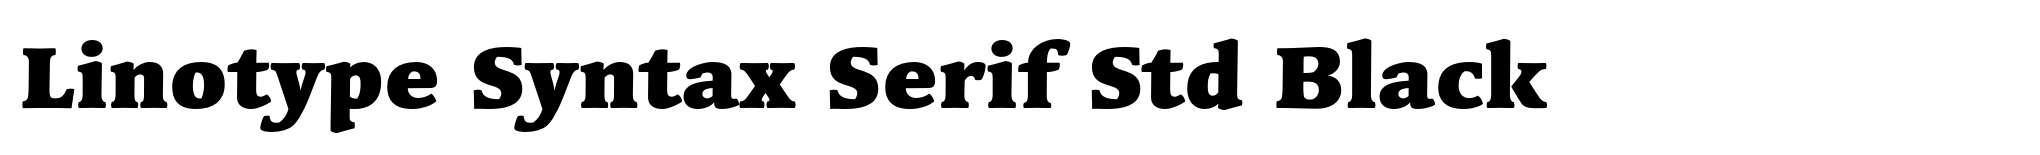 Linotype Syntax Serif Std Black image